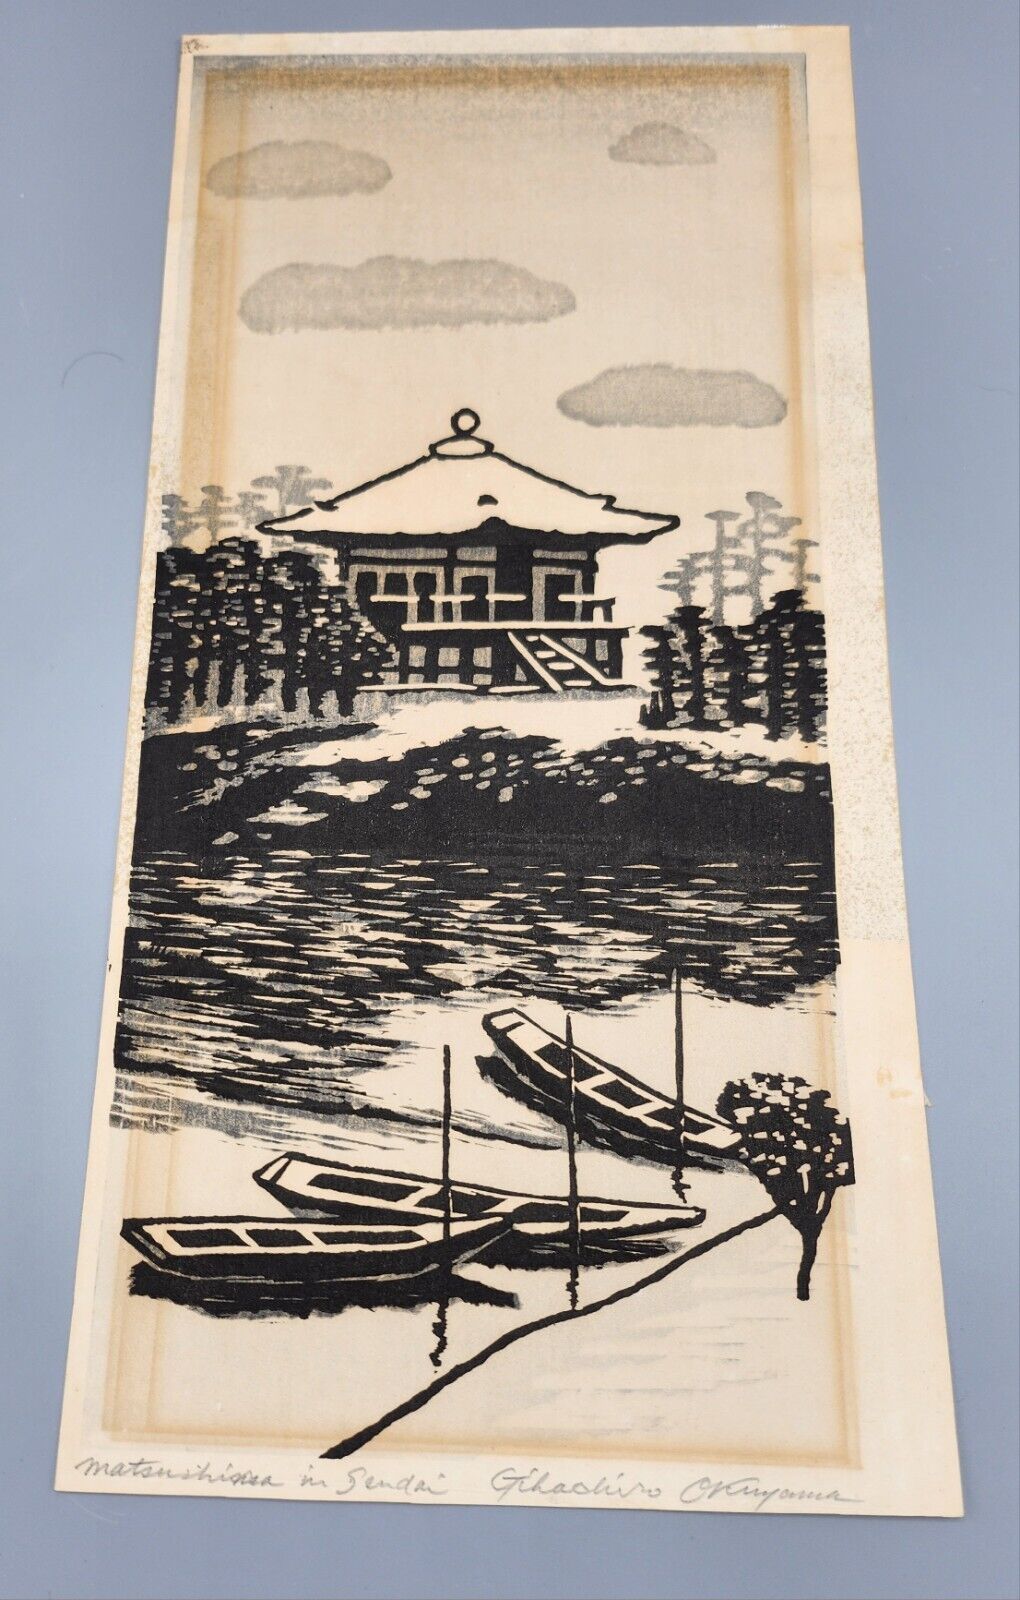  GIHACHIRO OKUYAMA Wood-Block Print